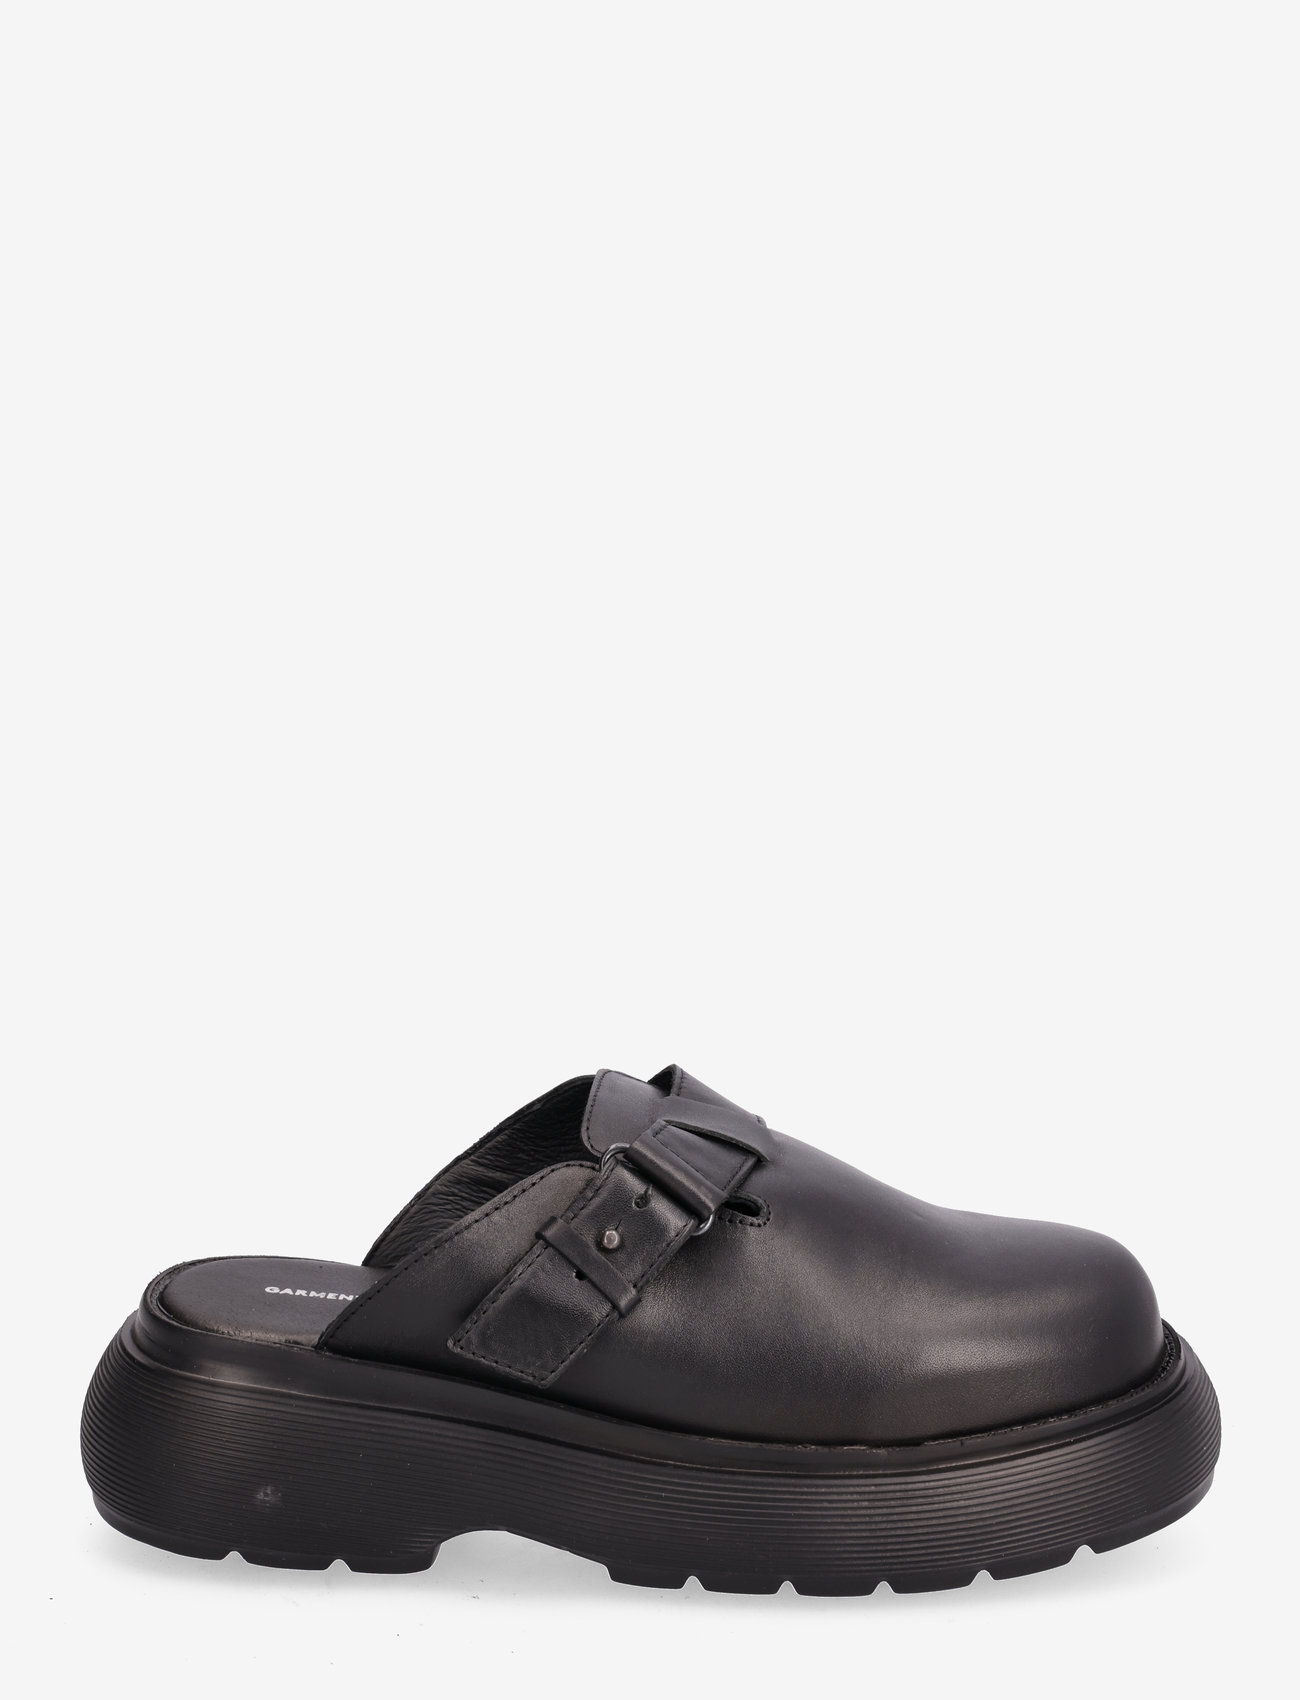 Garment Project - Cloud Clog - Black Leather - plakanās mules tipa kurpes - black - 1